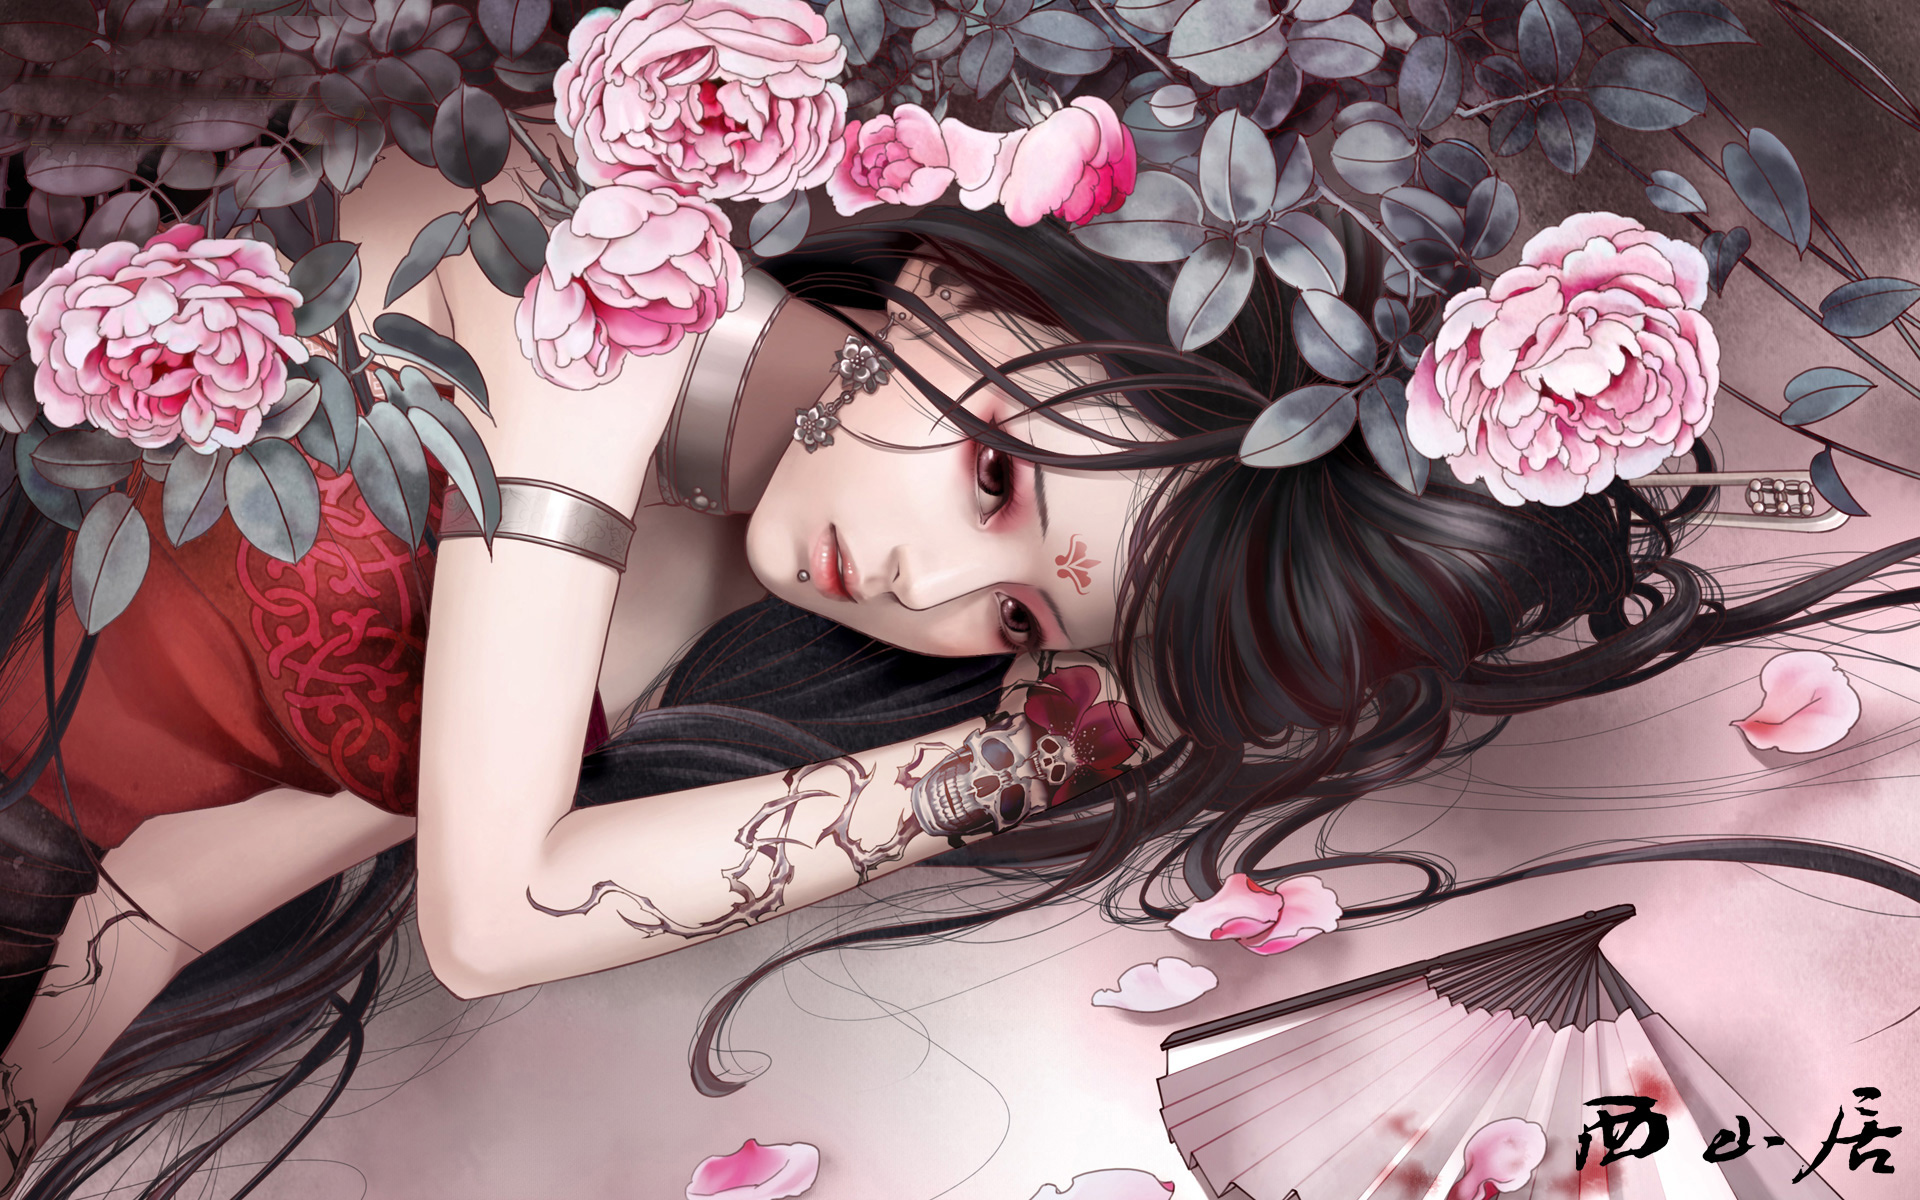 lying down, fan, video game, jx online, asian, fantasy, pink rose, rose, skull, tattoo 32K